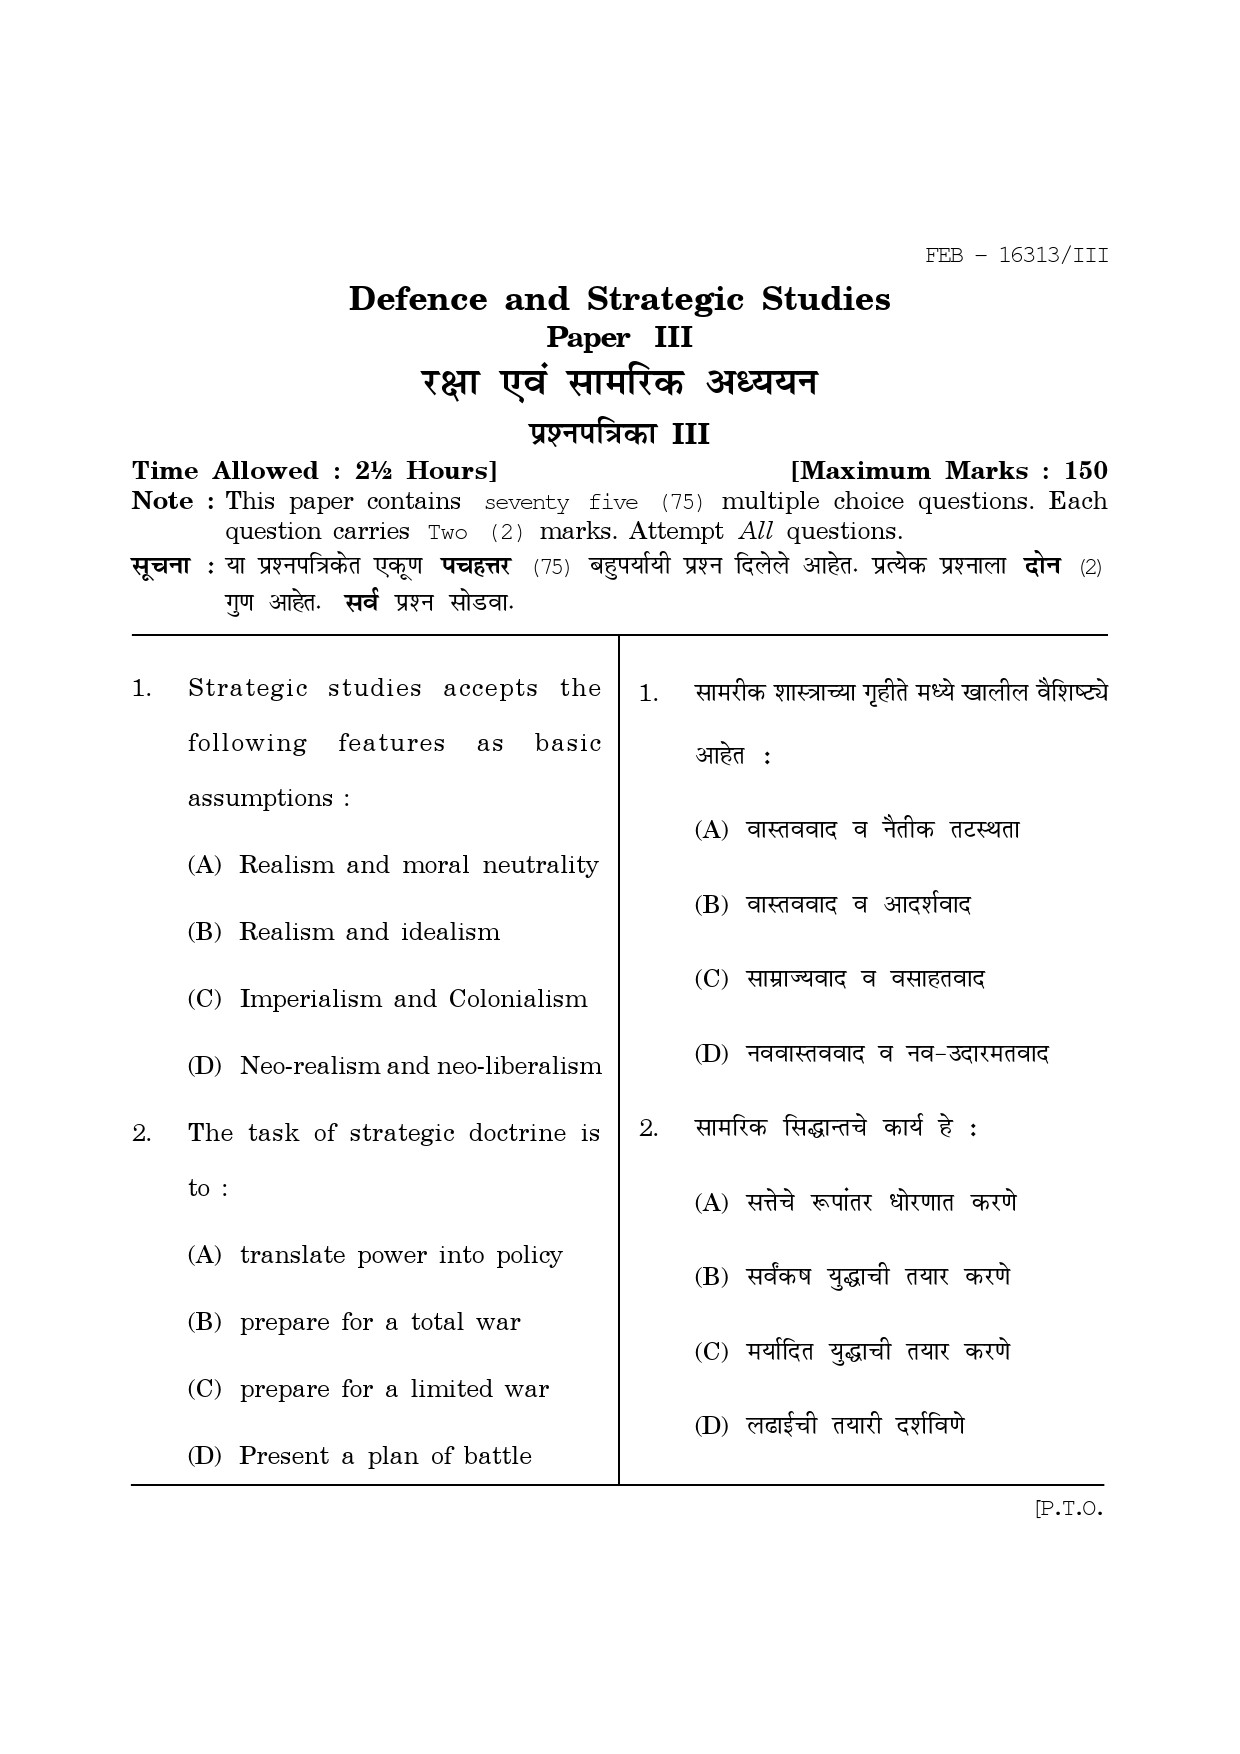 Maharashtra SET Defence and Strategic Studies Question Paper III February 2013 1